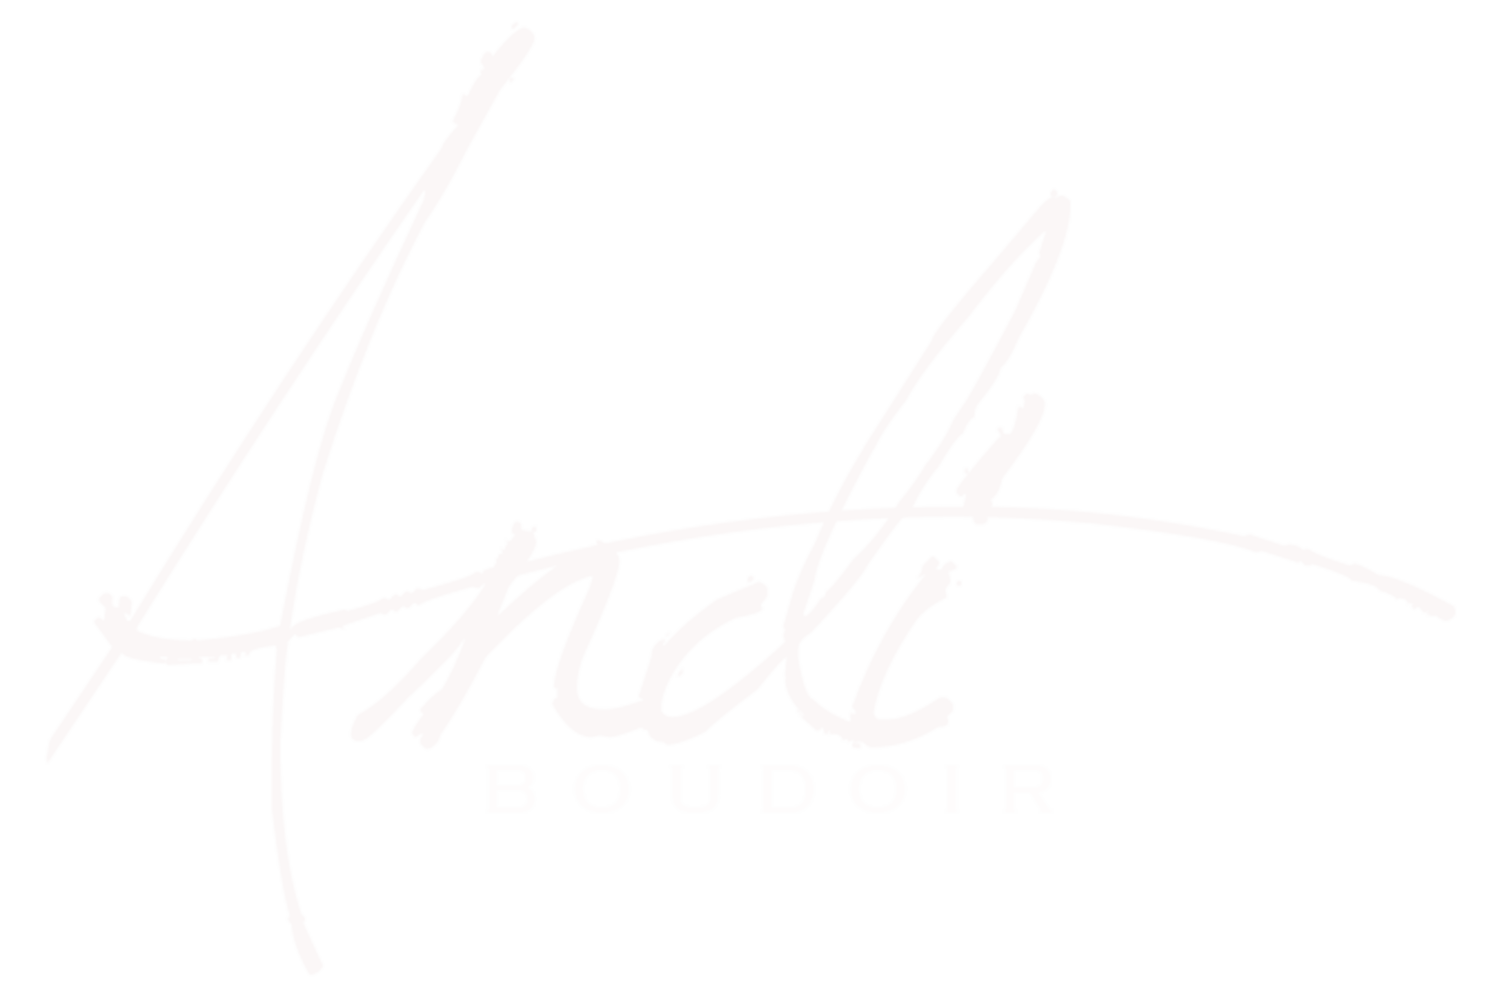 Andi Boudoir